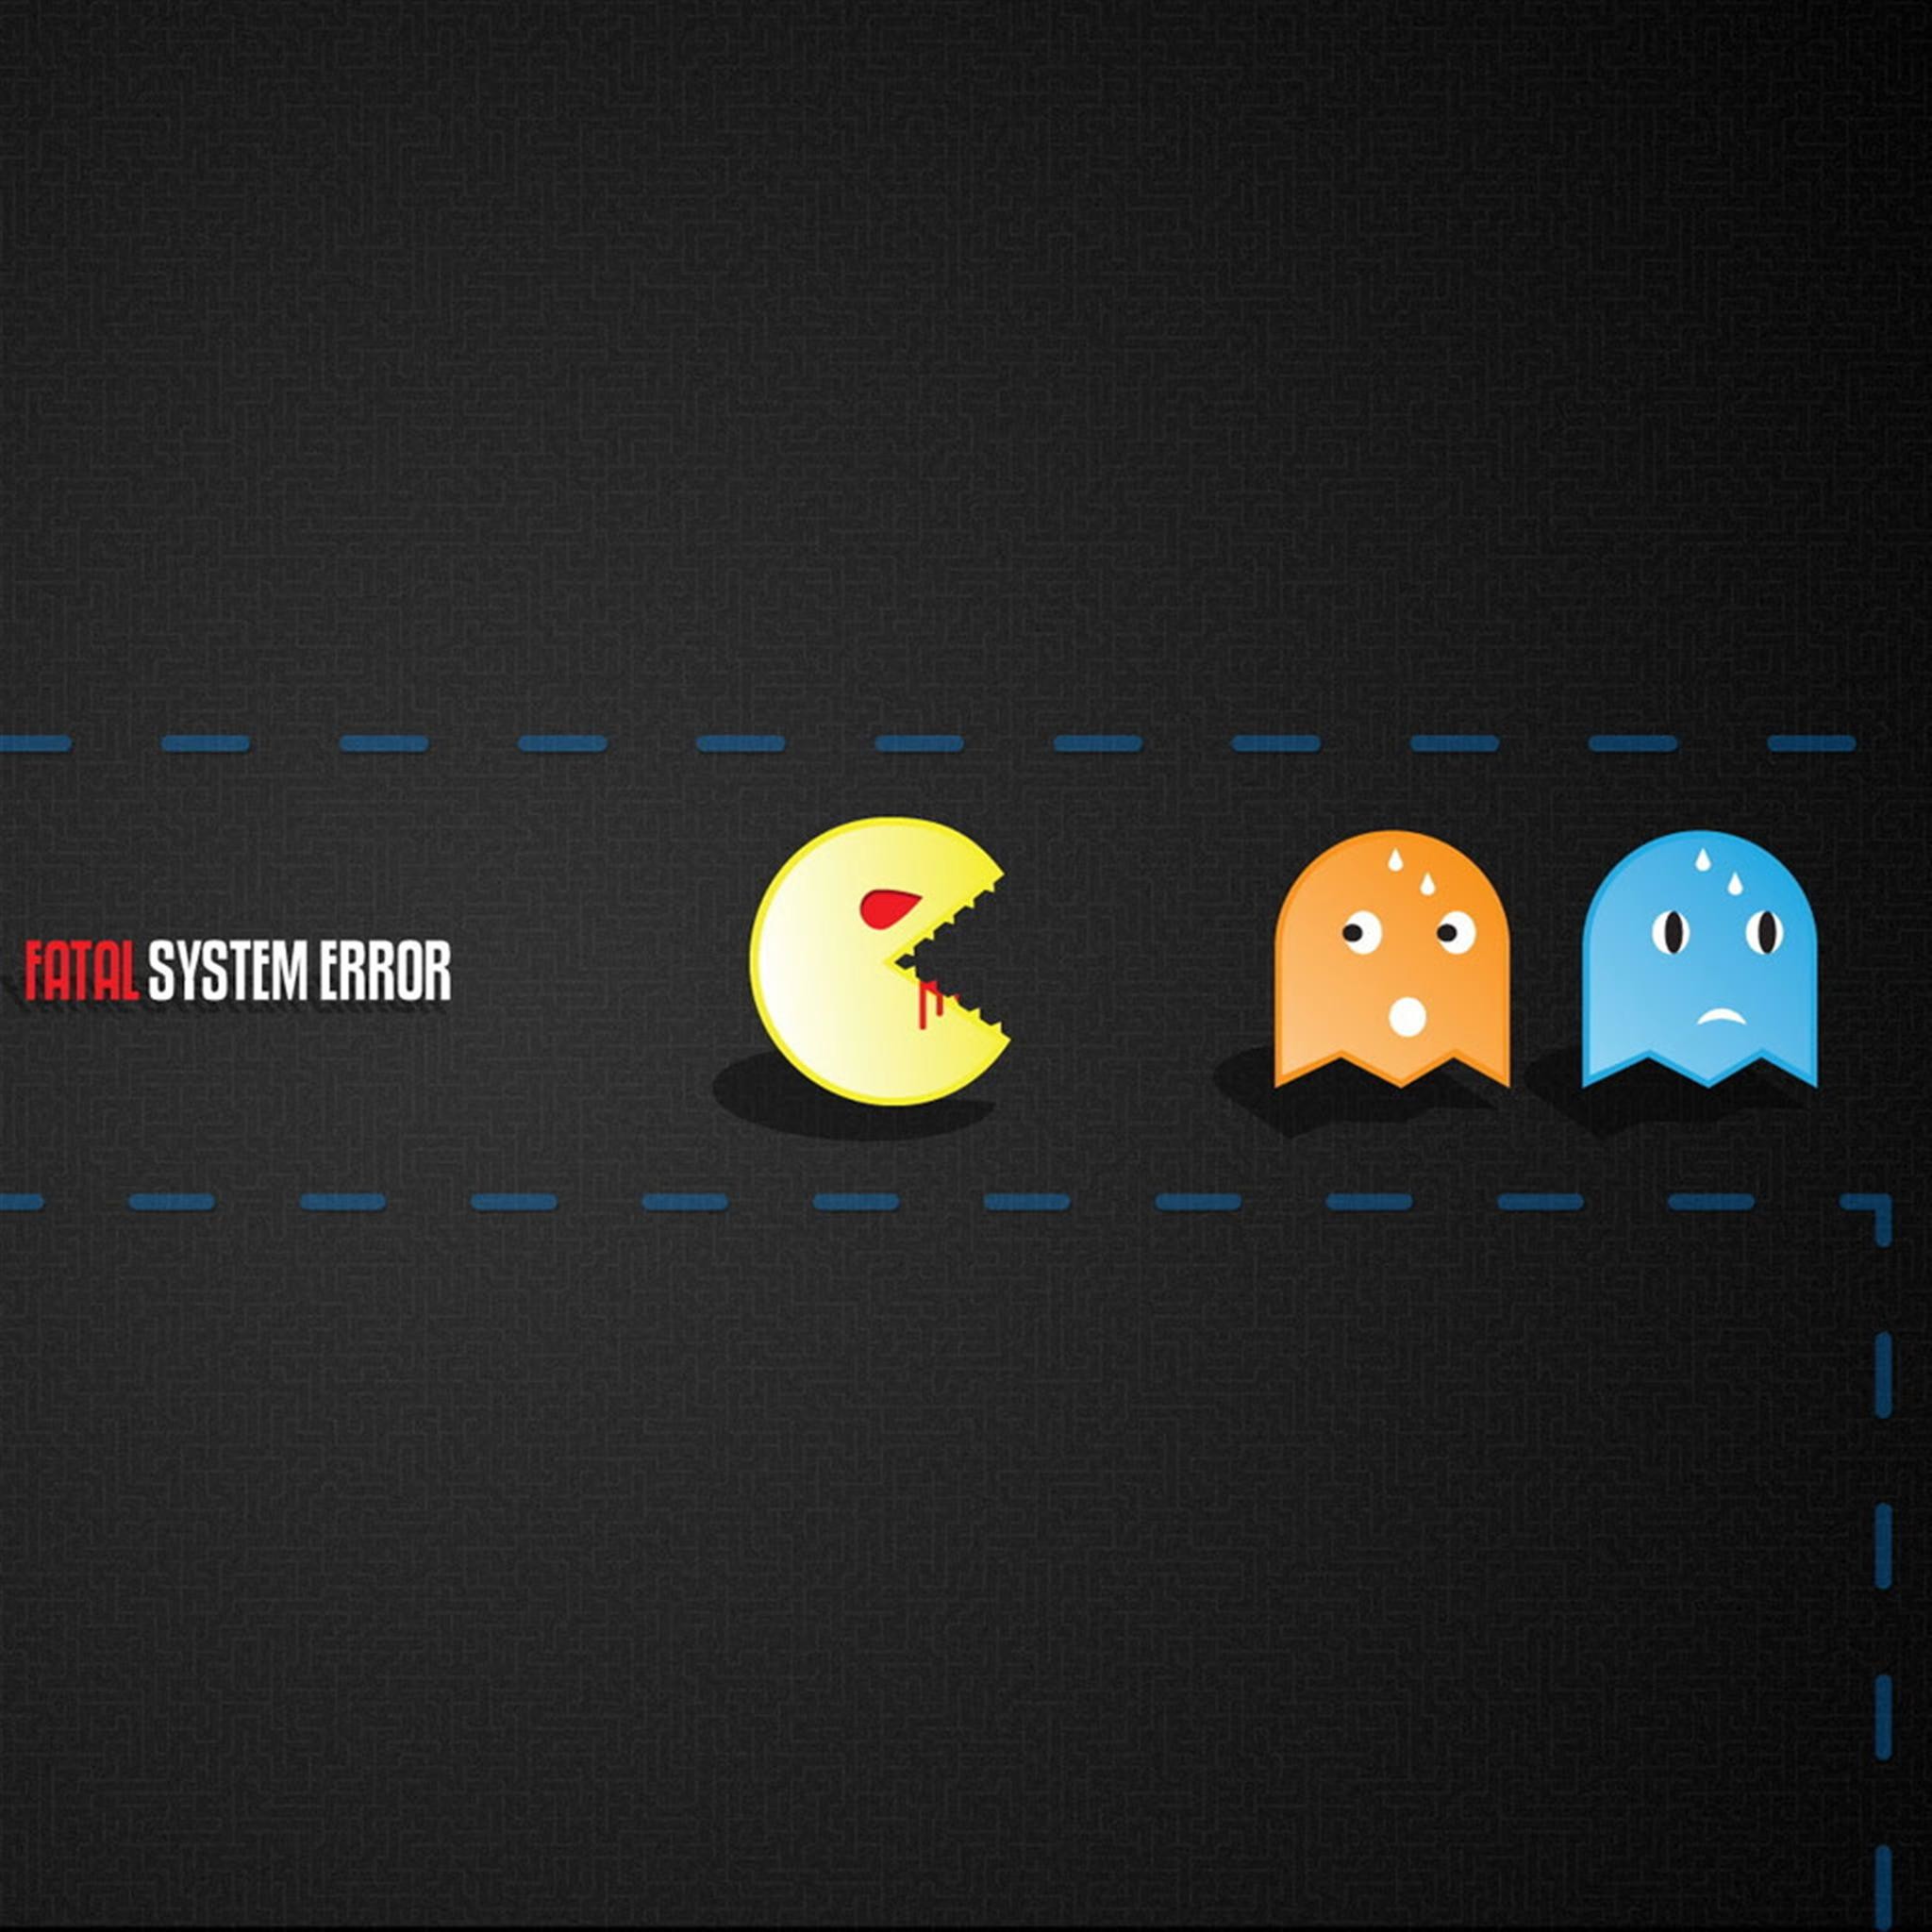 2048x2048 Pacman wallpapers - fatal system error